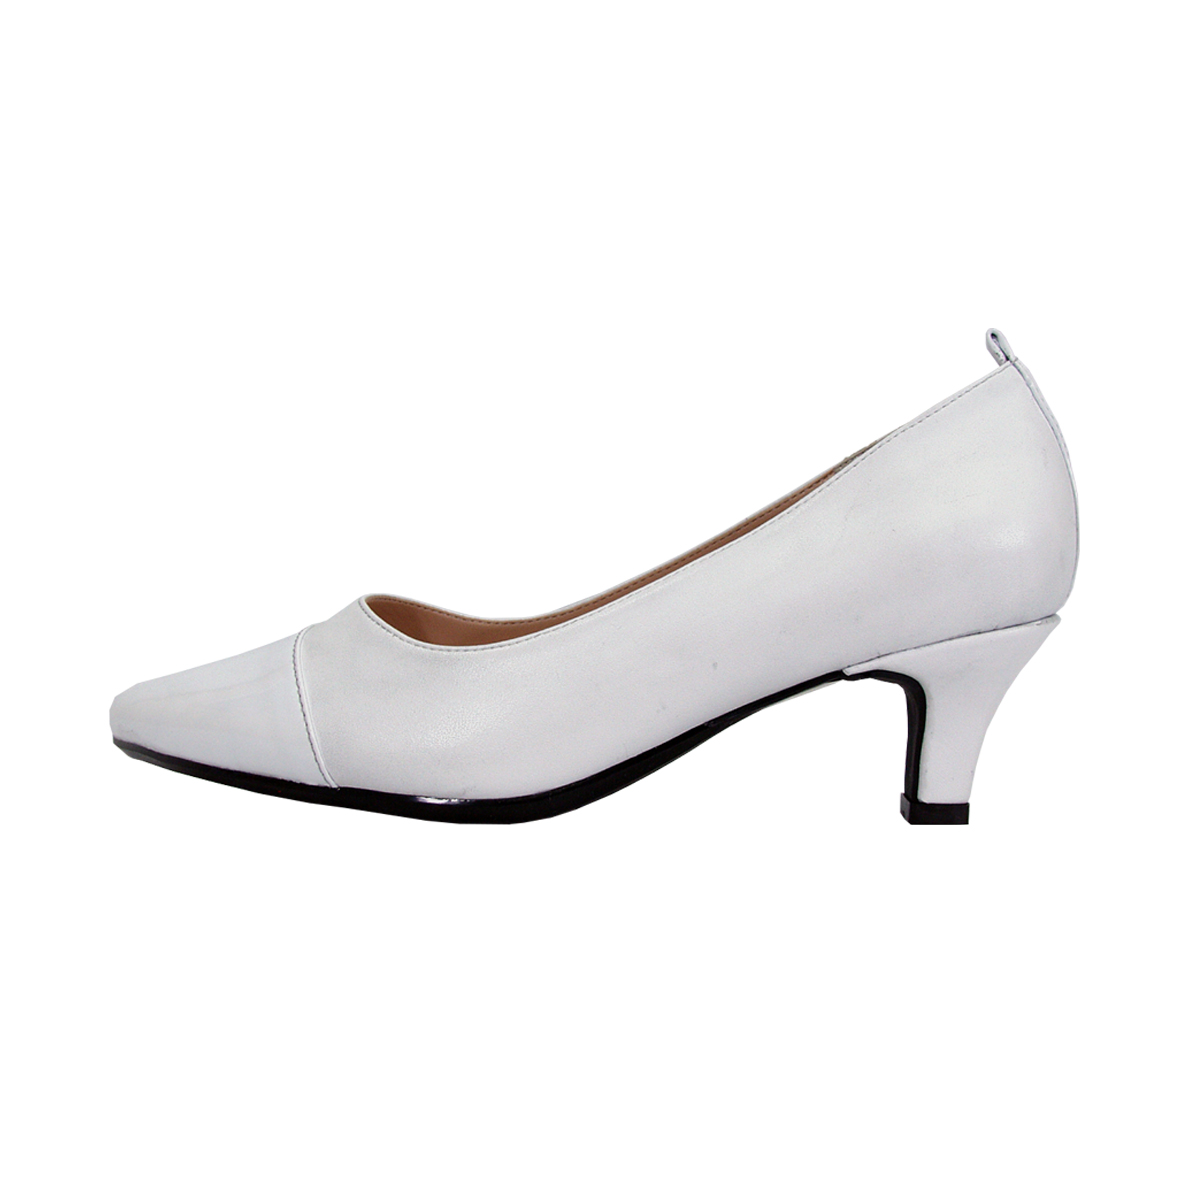 PEERAGE Arlene Women's Wide Width Casual Comfort Mid Heel Dress Shoes for Wedding, Prom, Evening, Work WHITE 8 - image 3 of 6